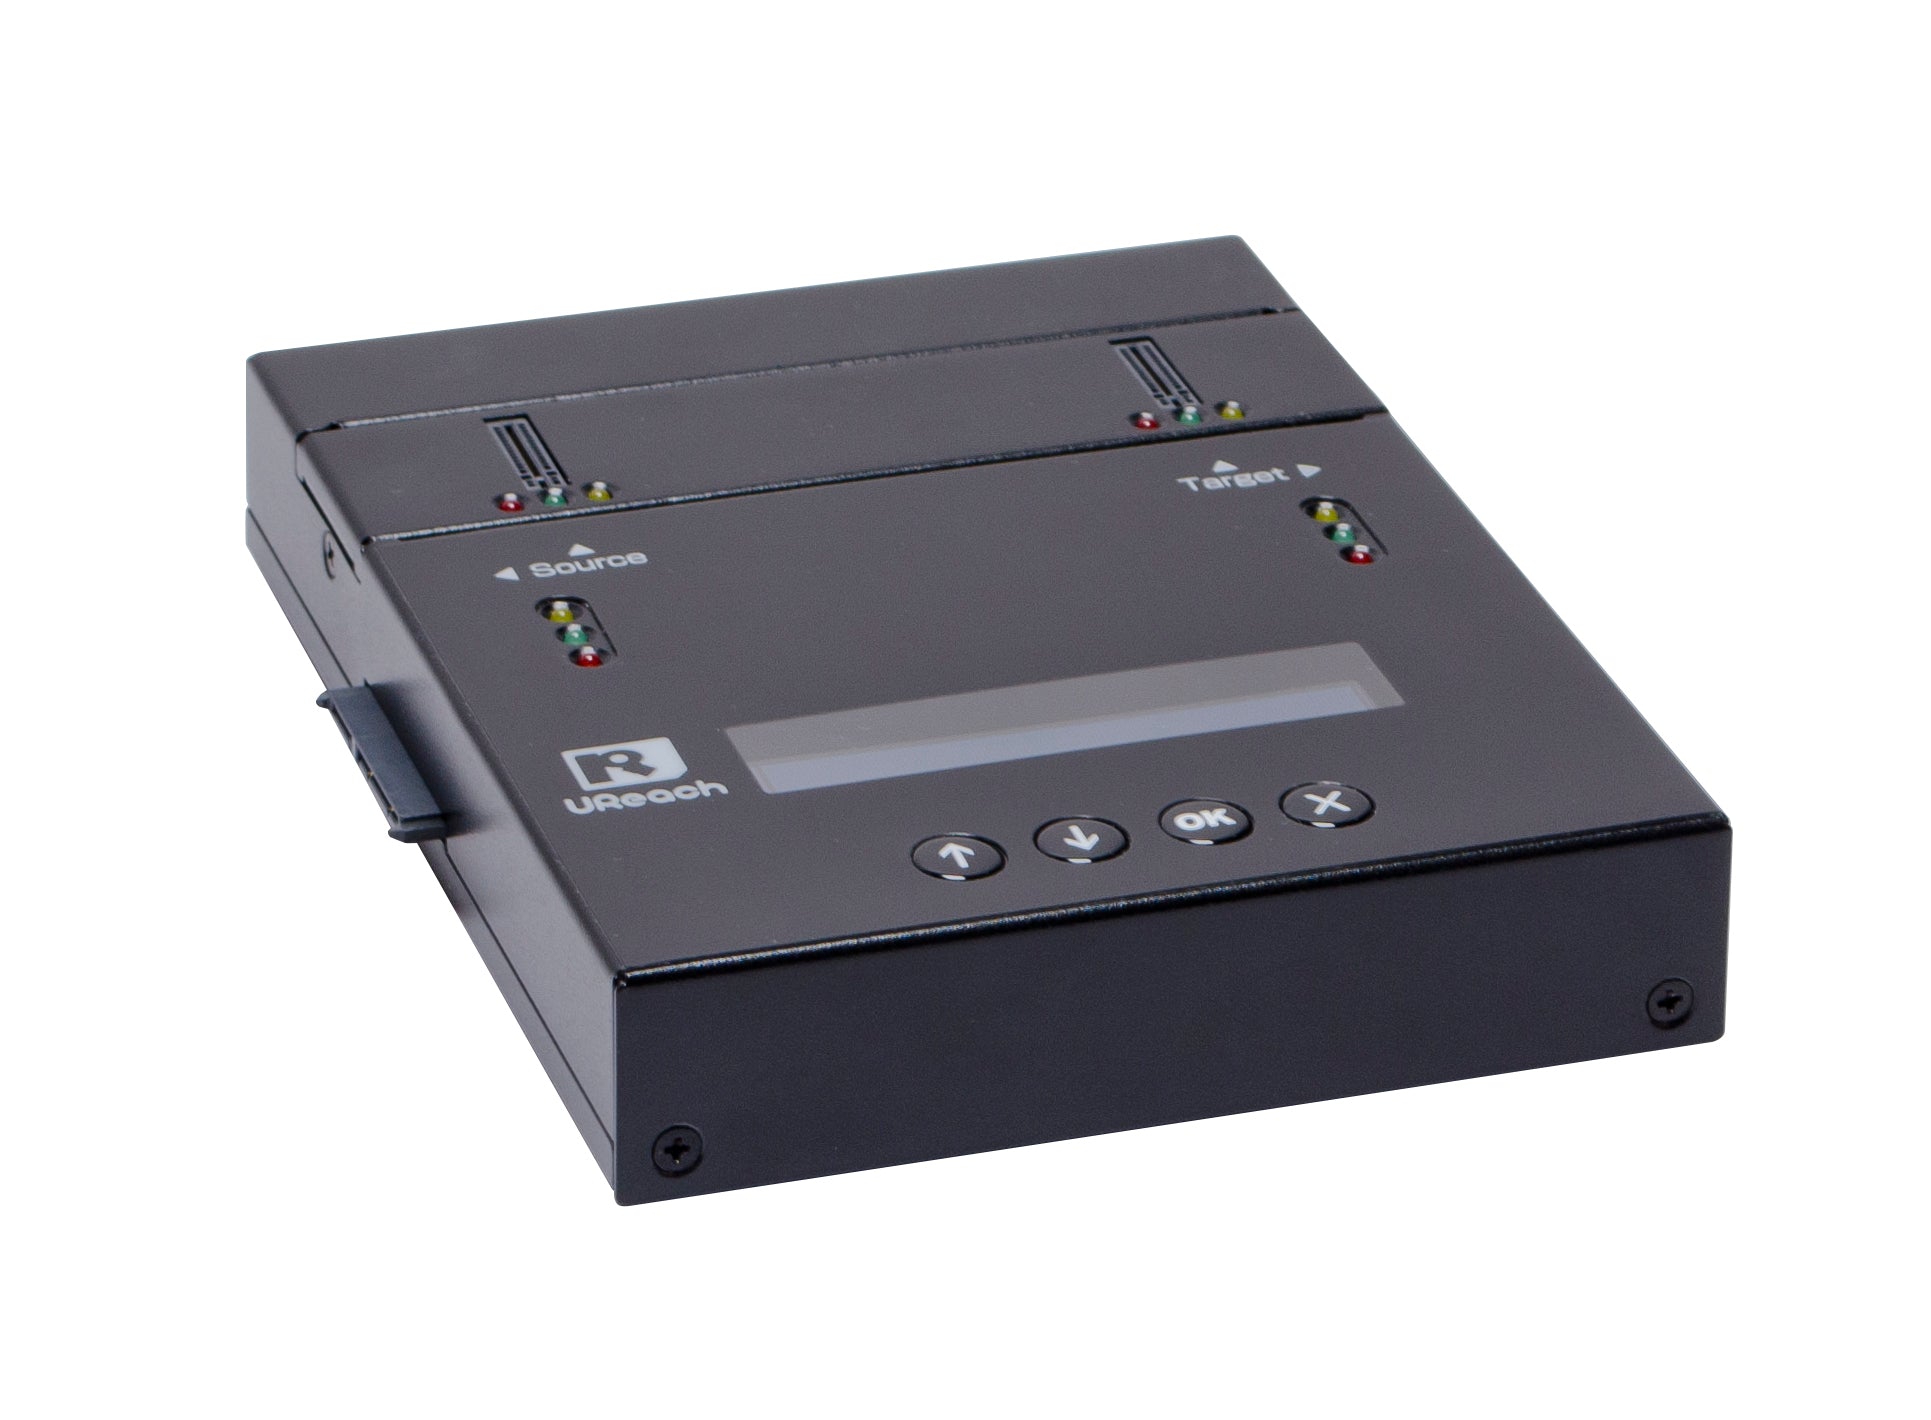 U-Reach SP151 1對1 M.2 SATA/NVME  雙介面硬碟拷貝機&抹除機